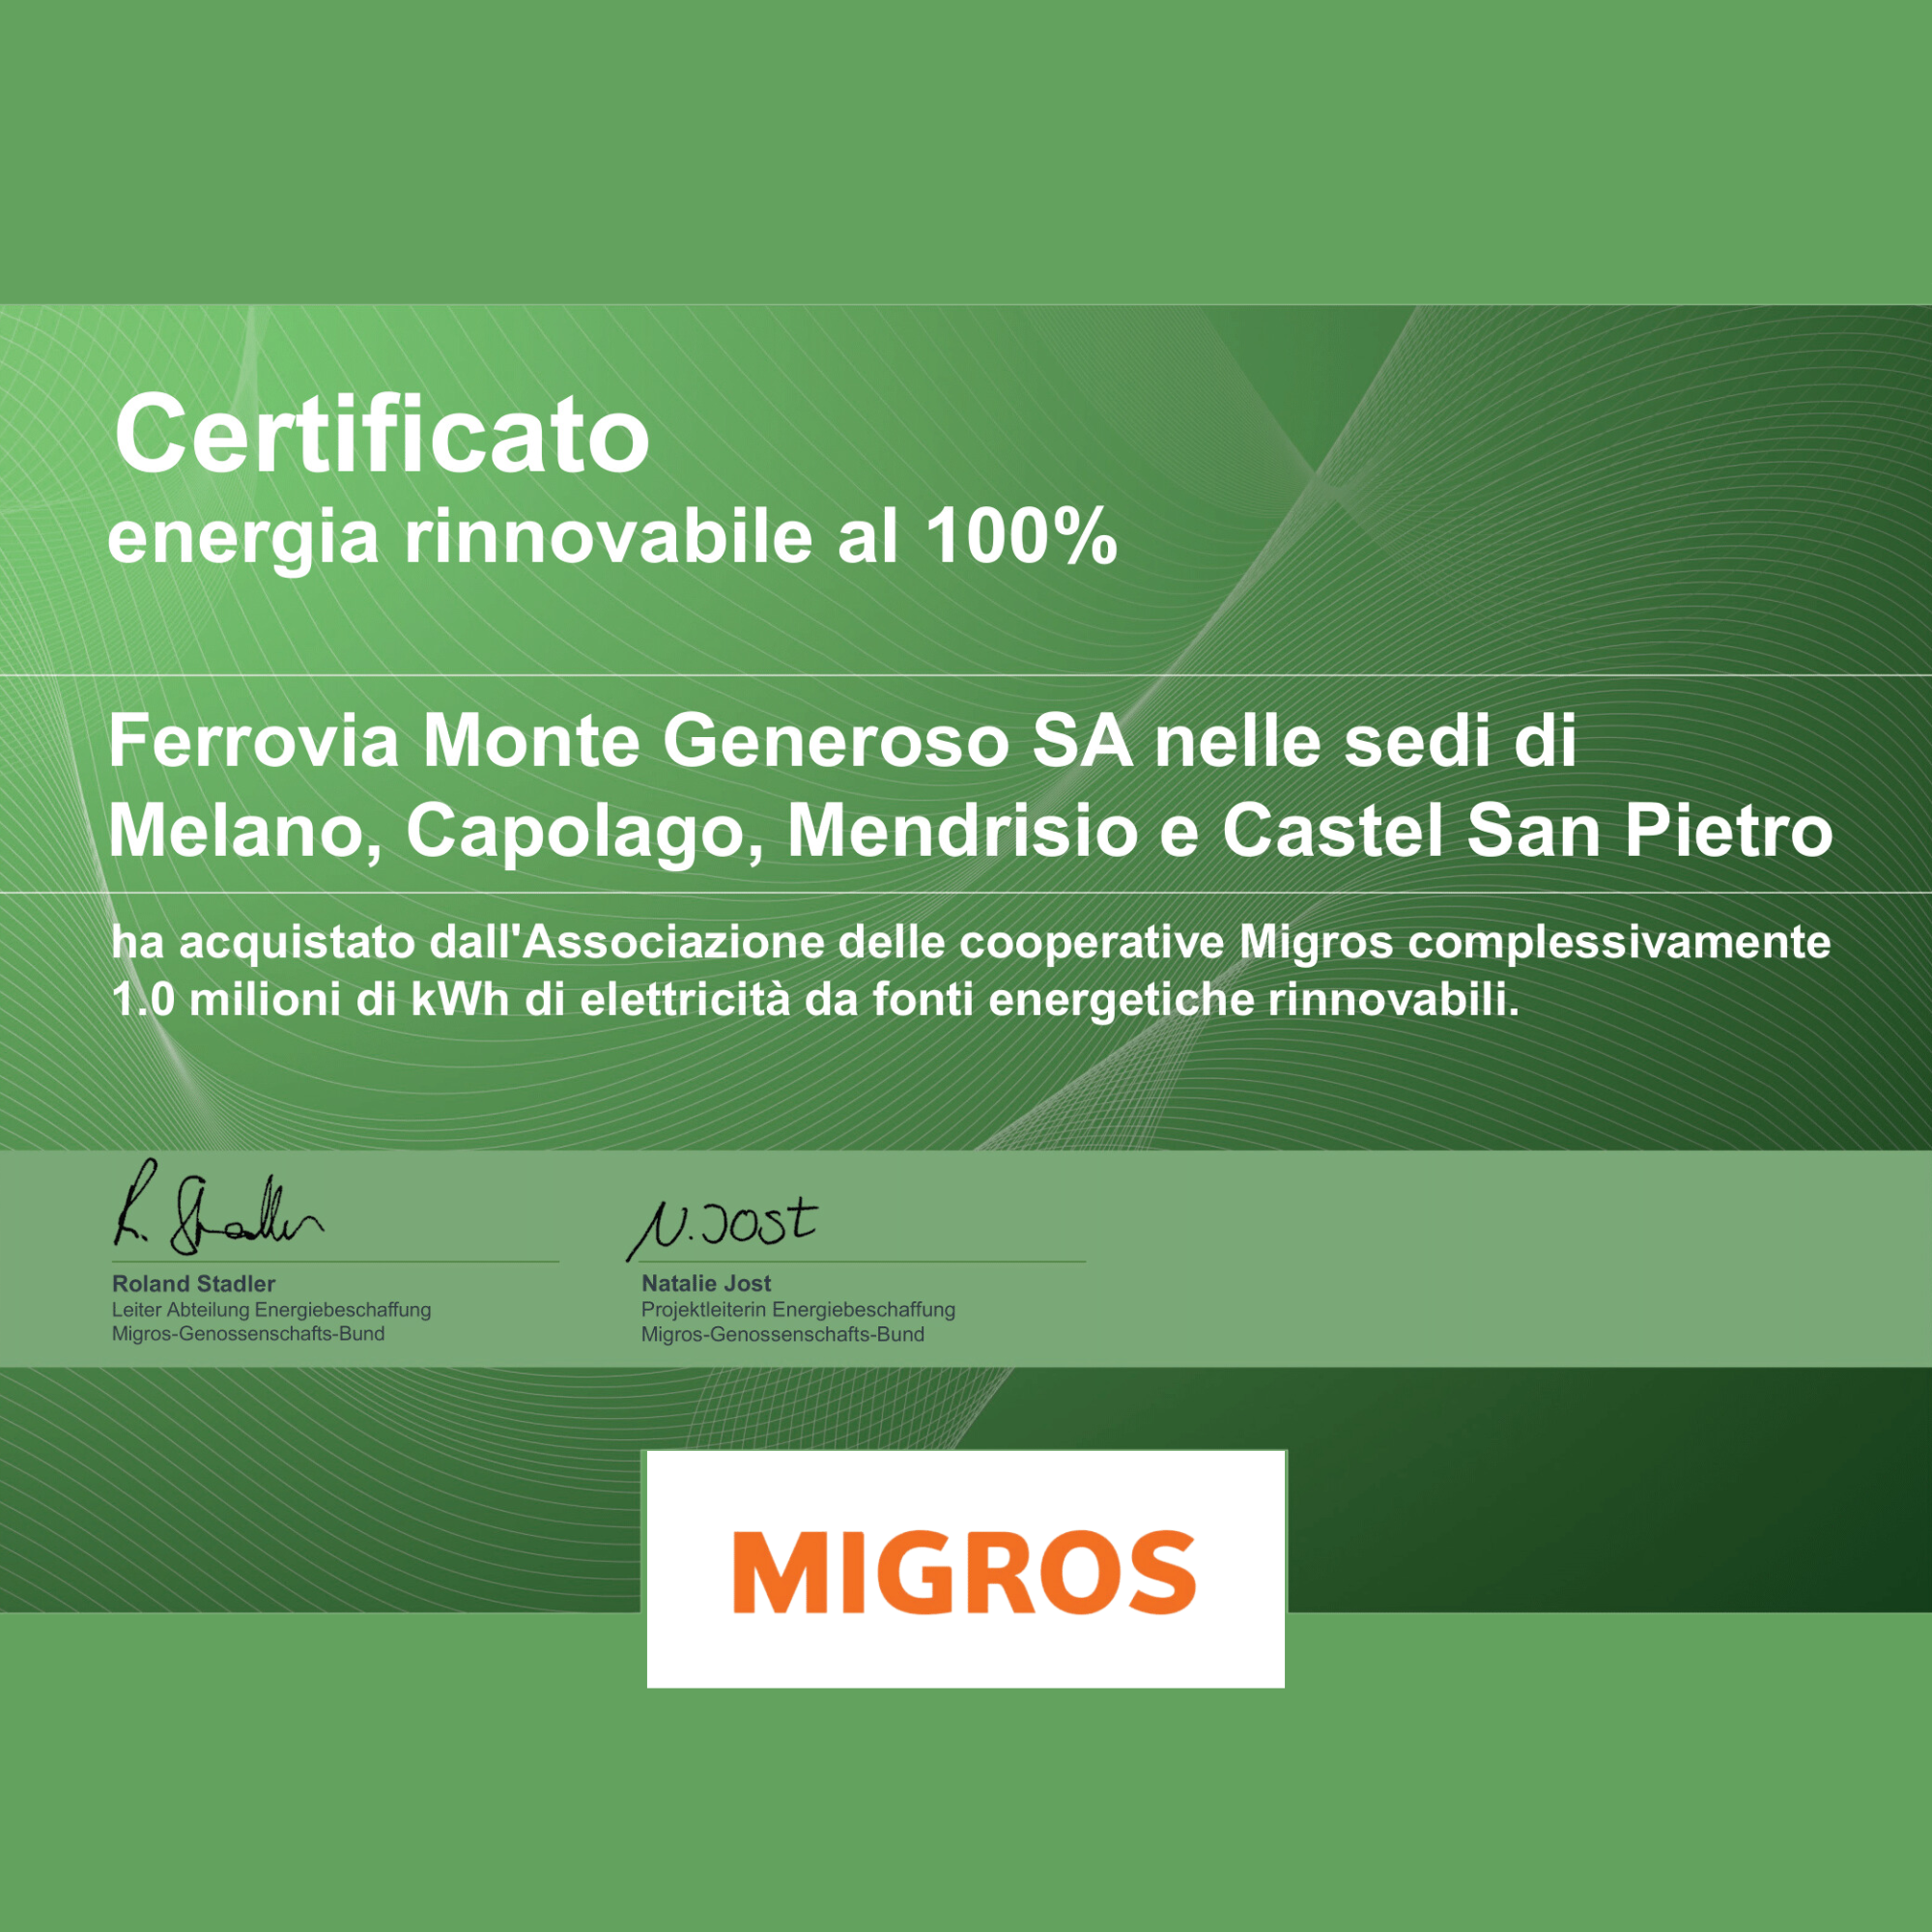 Migros certificate 